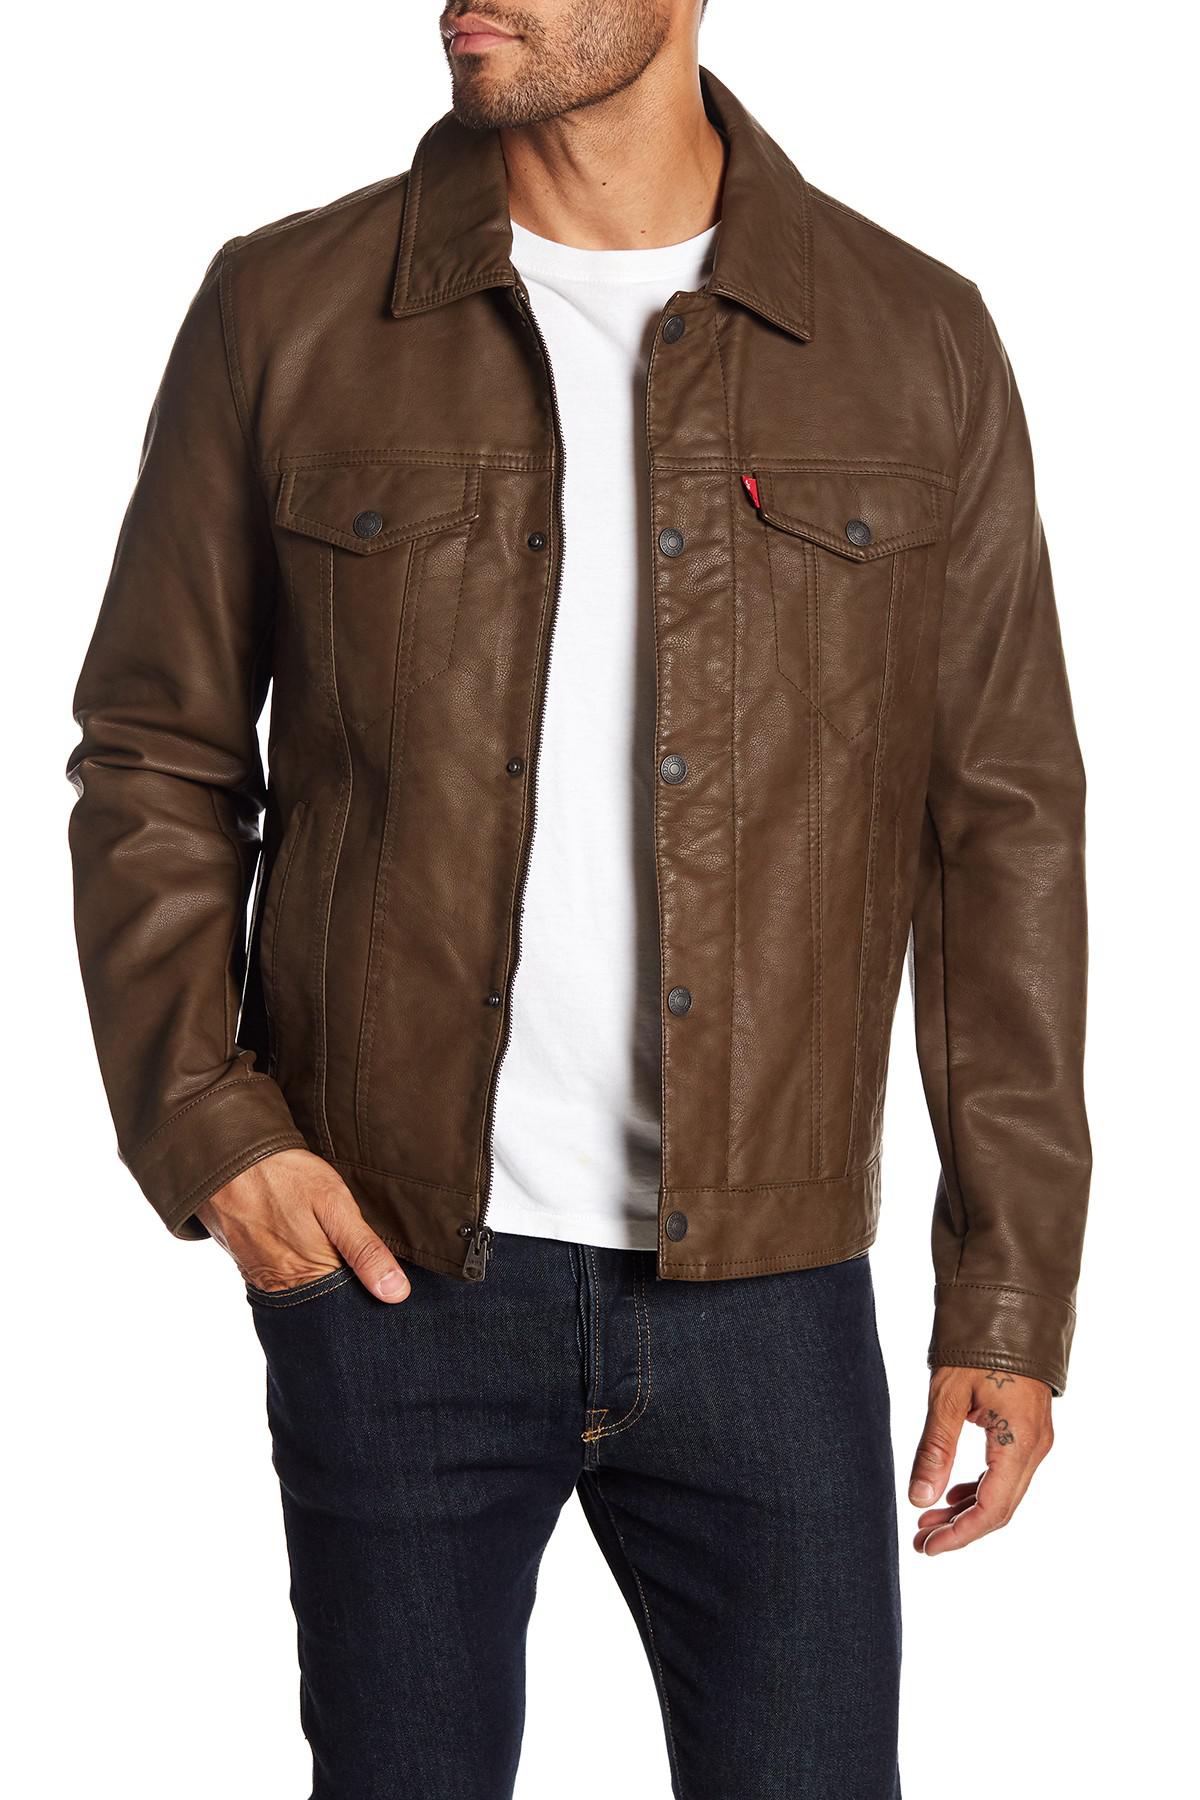 levi leather trucker jacket Cheaper 